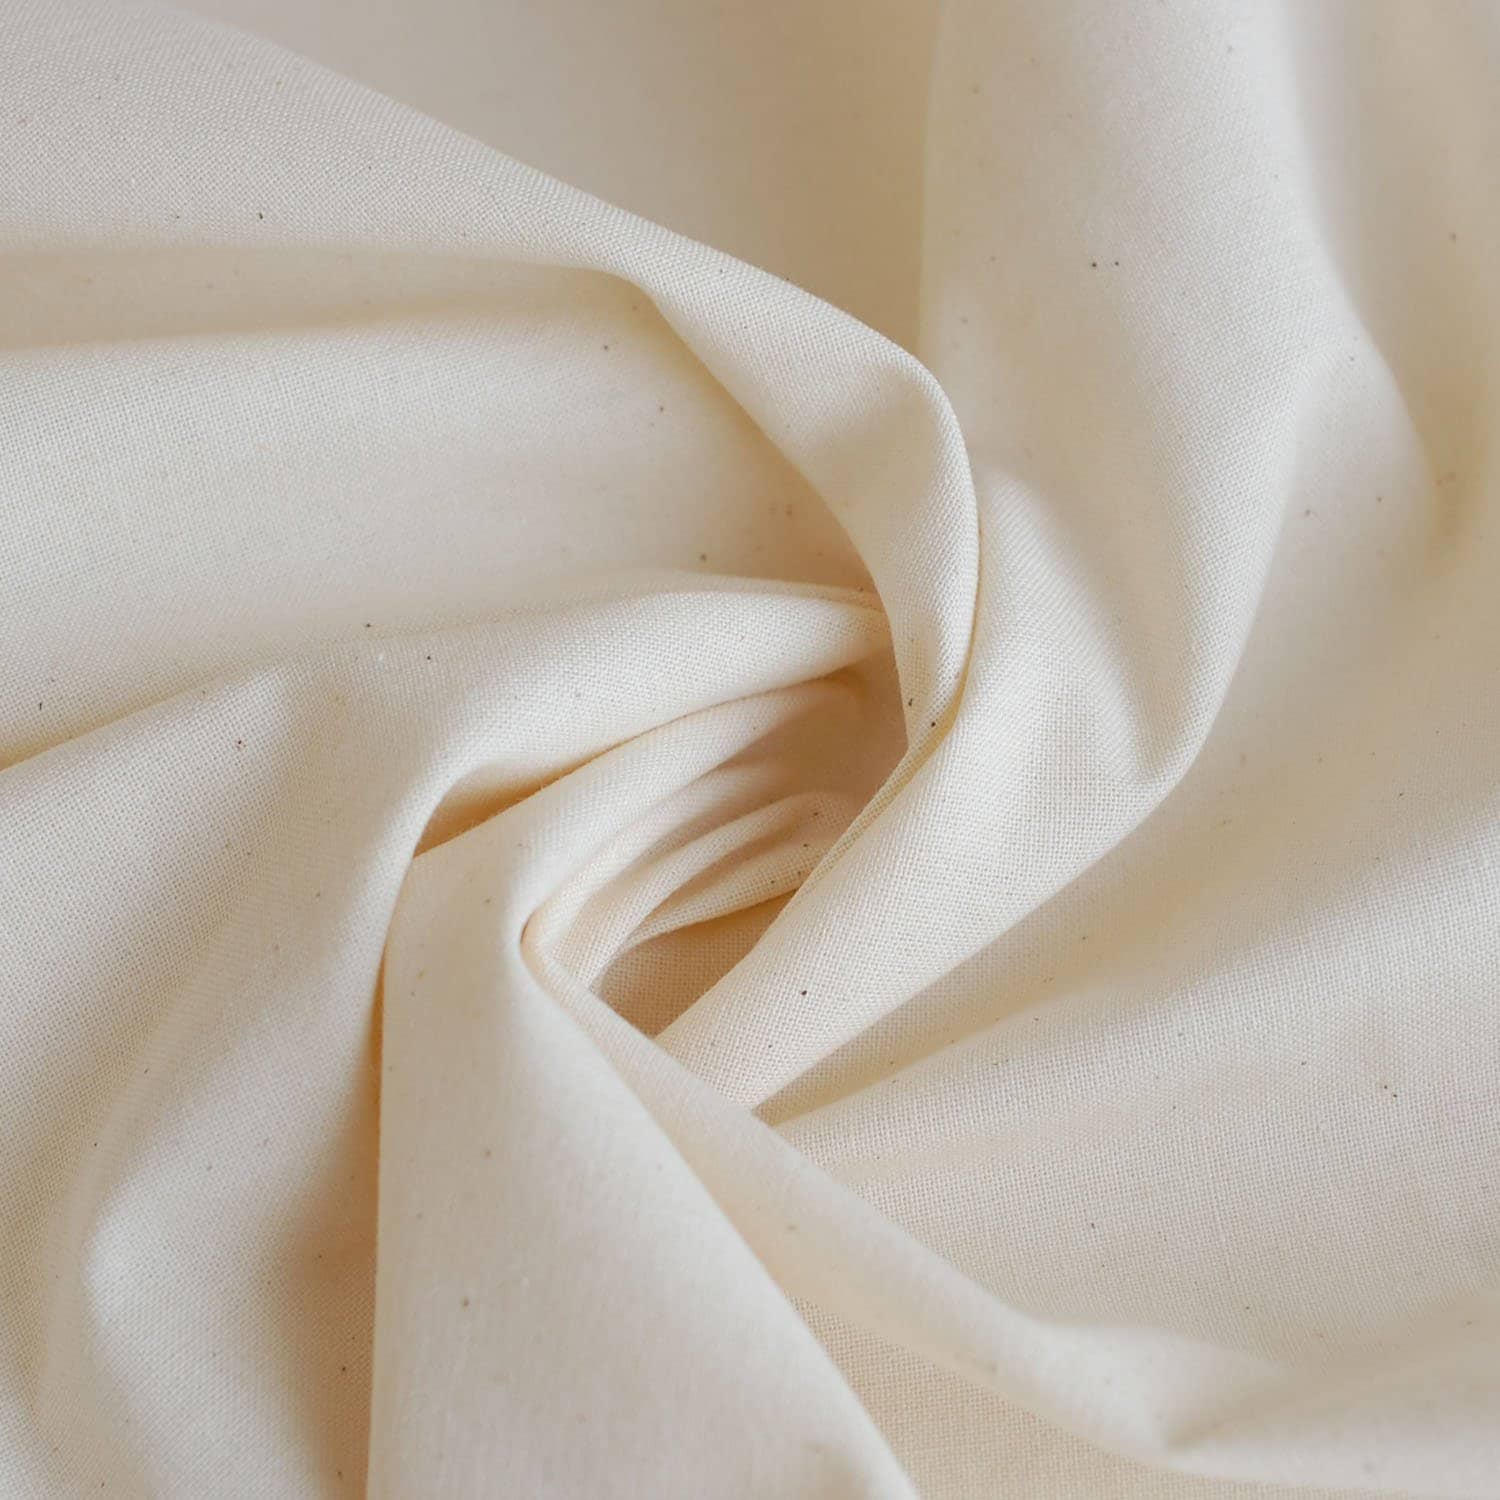 Hanes Fabrics Cotton Muslin 36/38X15yd D/R-Unbleached/Natural